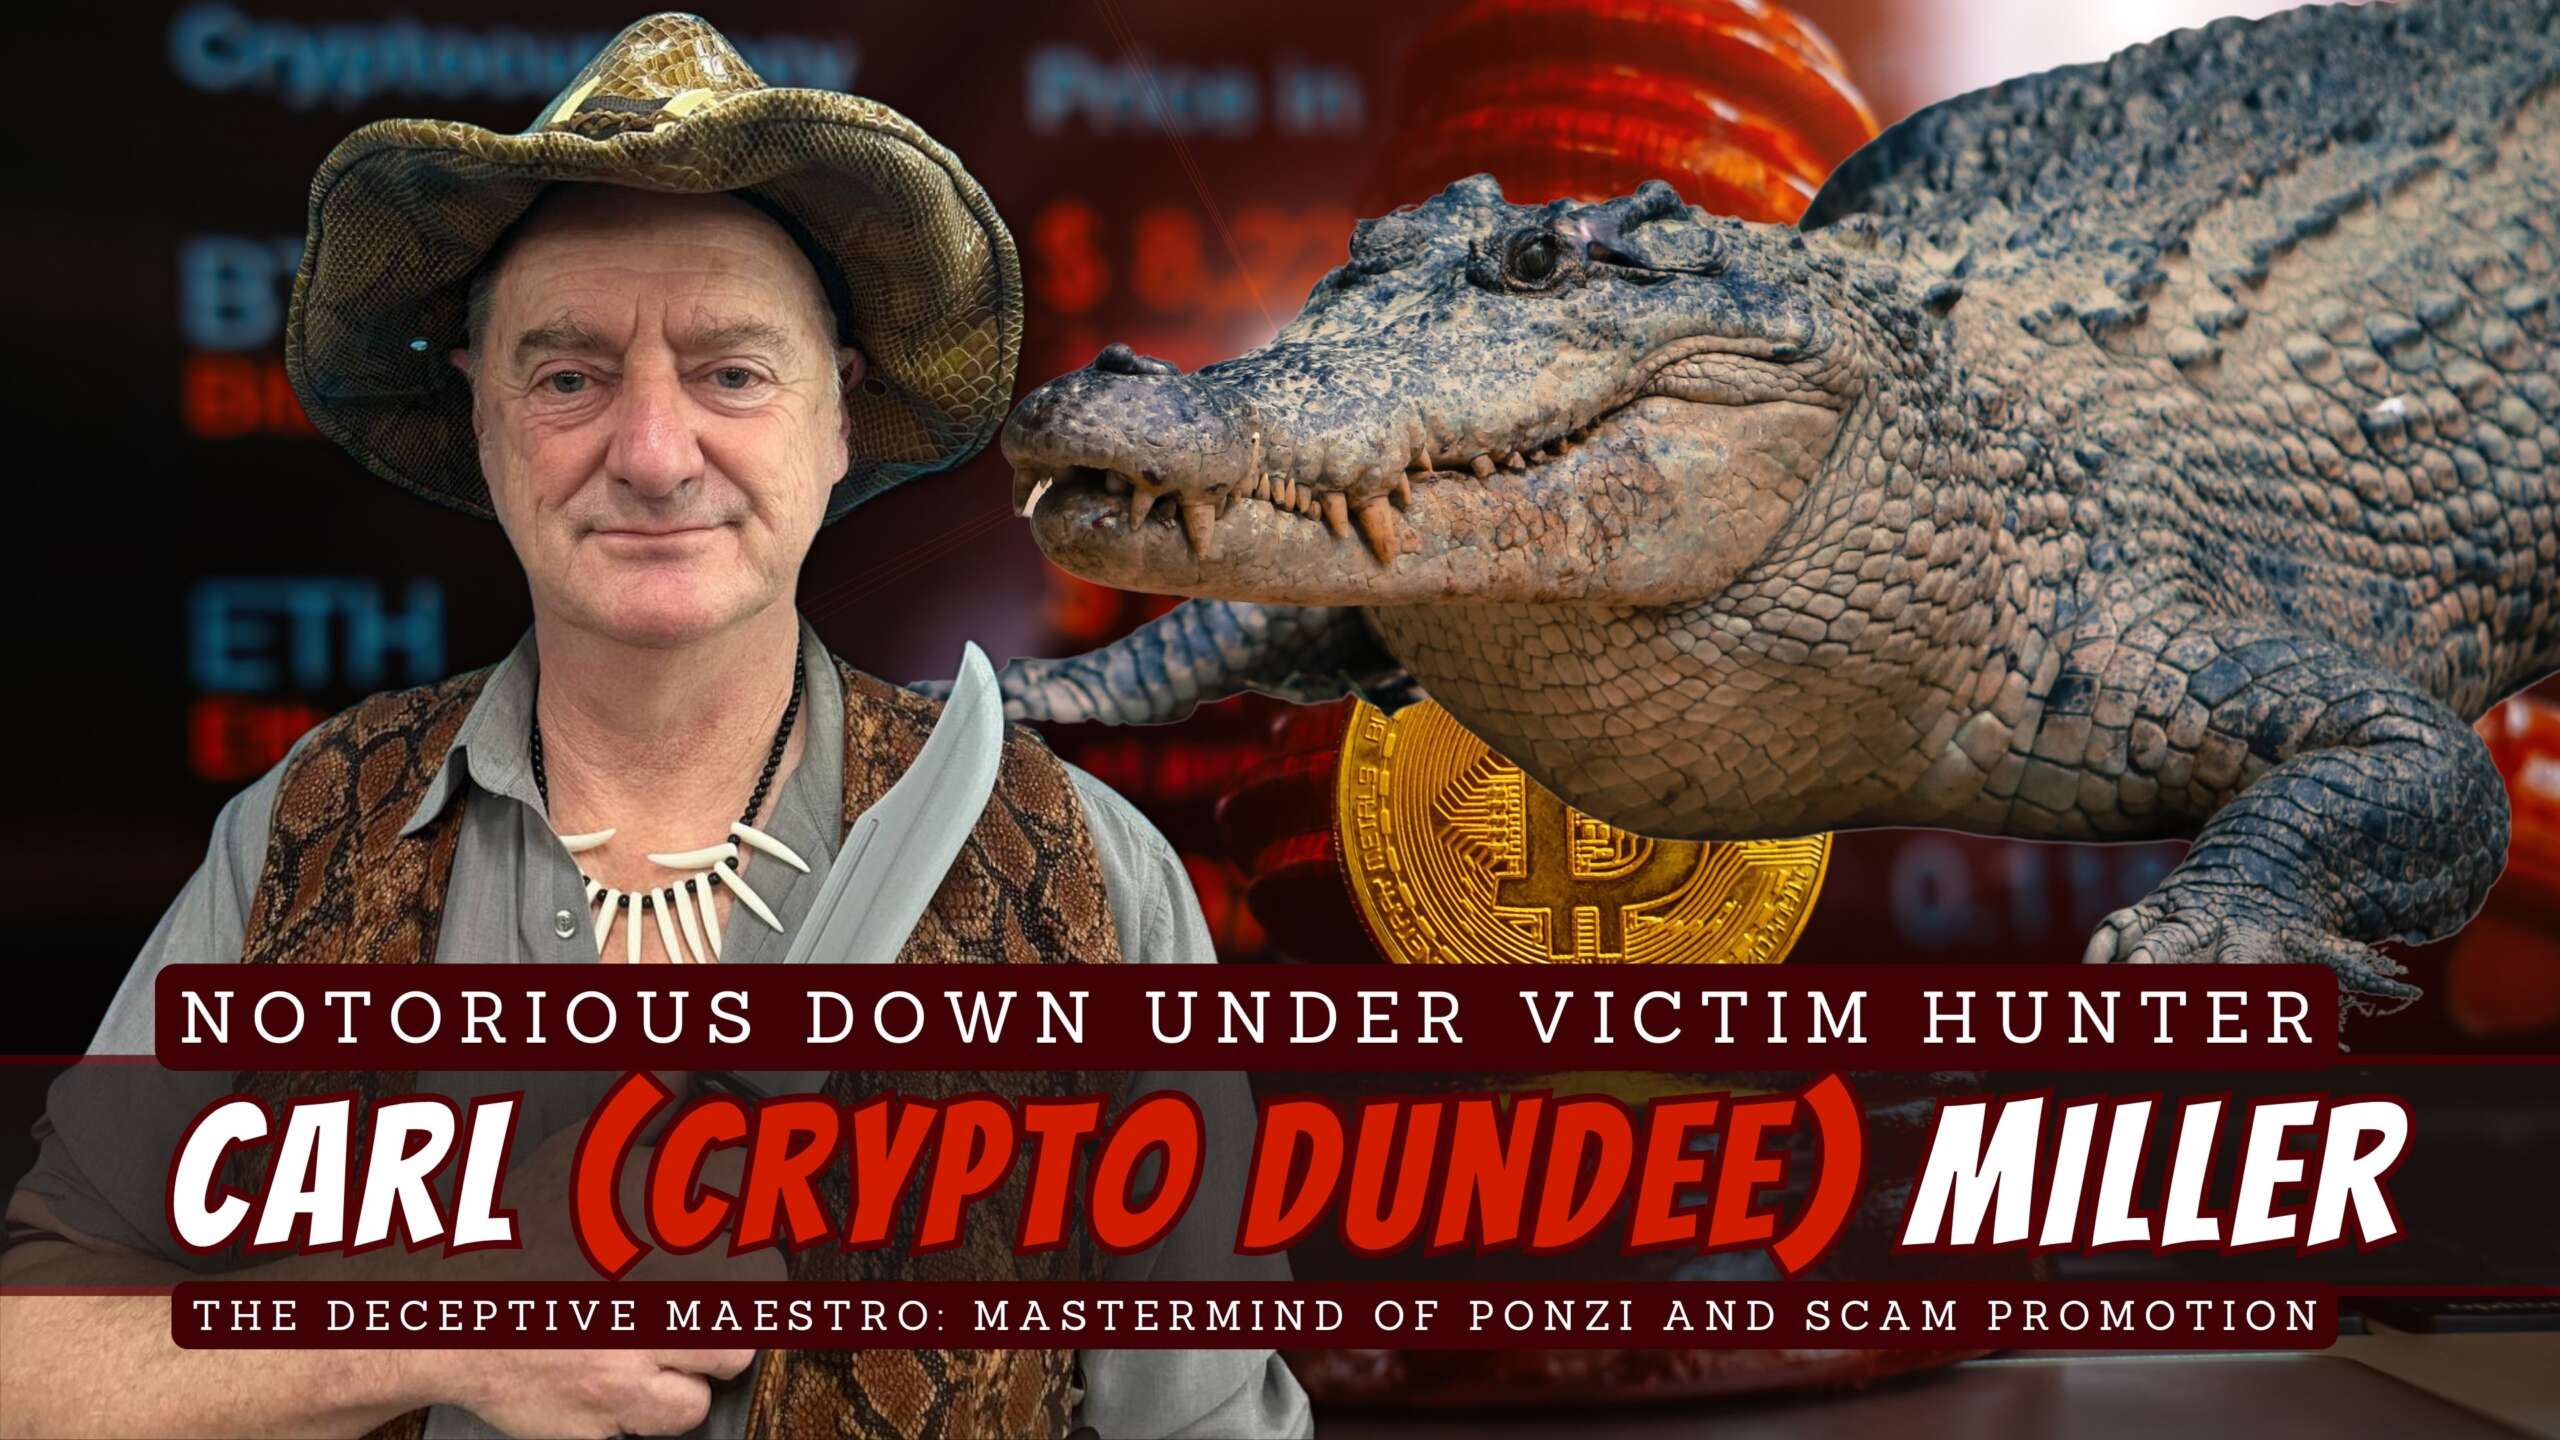 Exposing Crypto Dundee (Carl Miller) Australia's Ponzi Scheme Crusader - The Downunder Victim Hunter